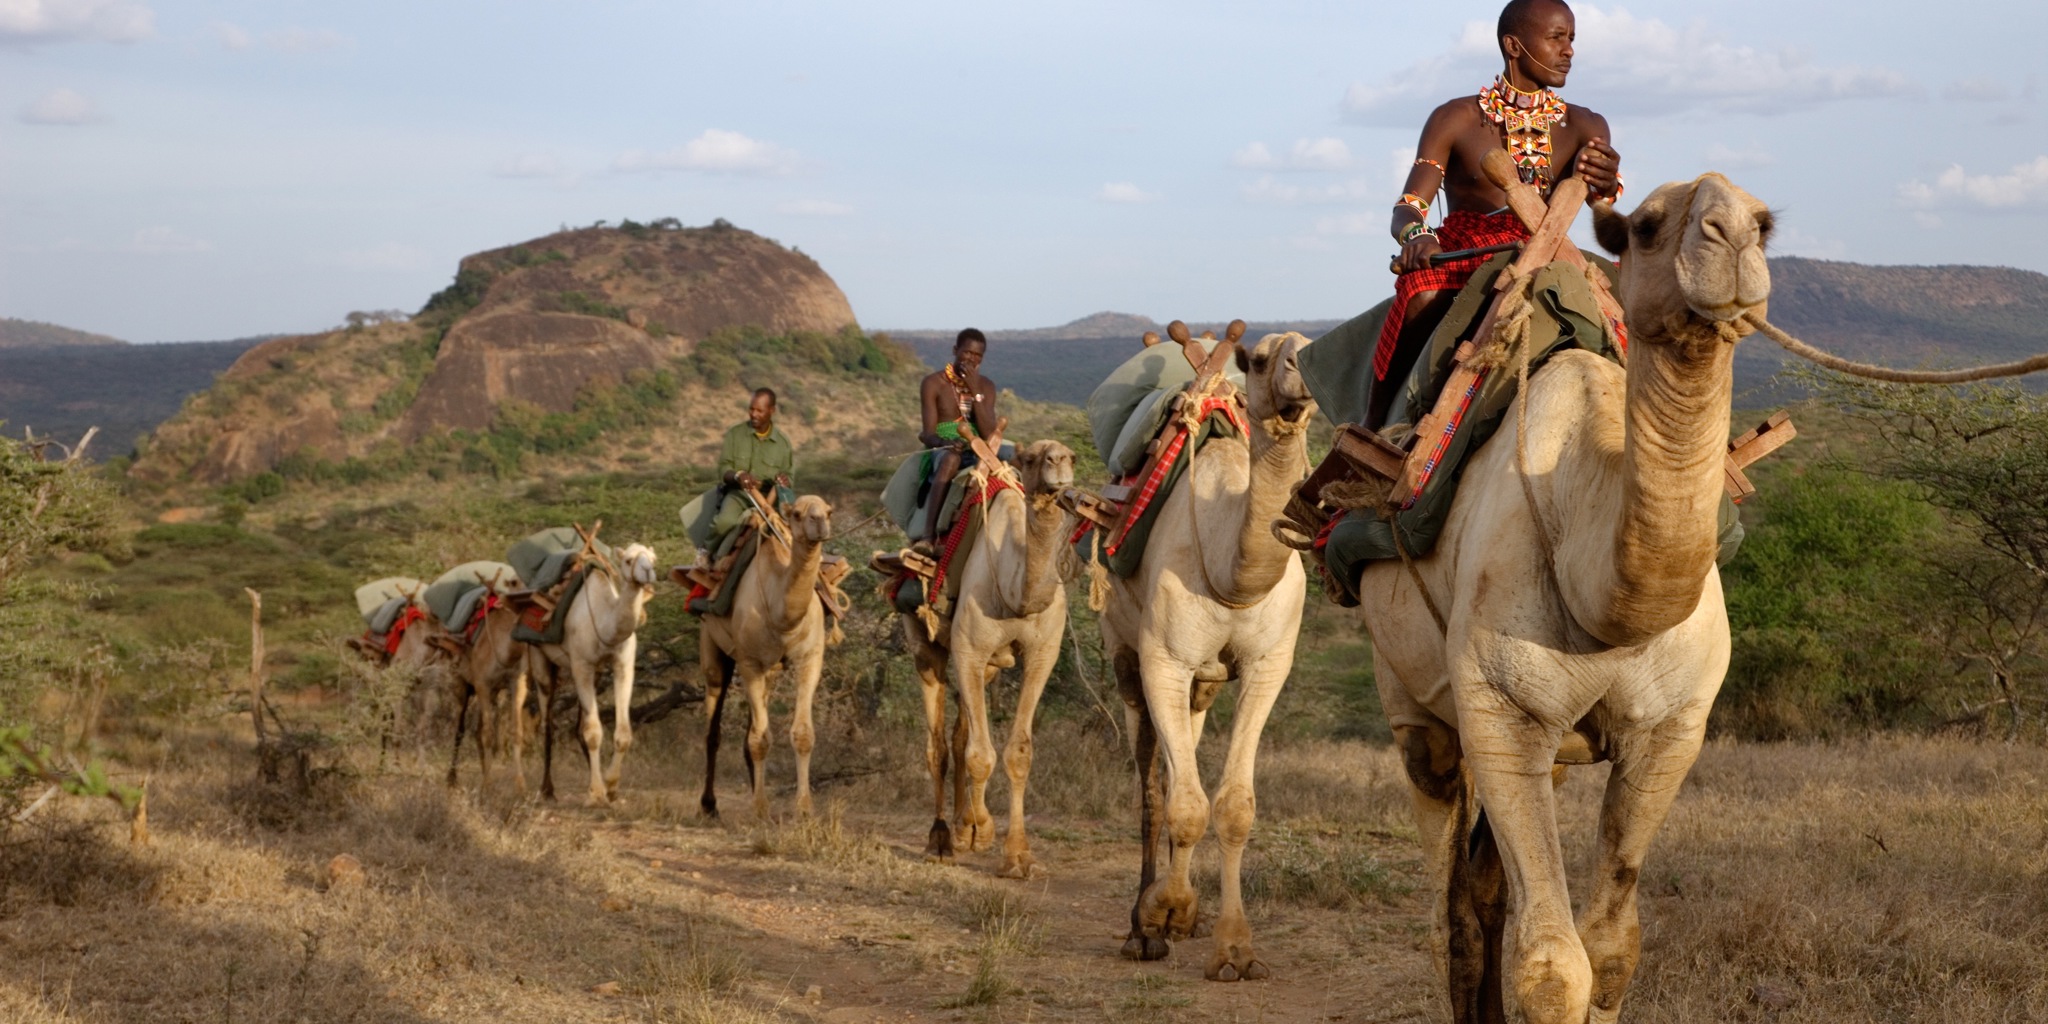 Camel ride safaris in Laikipia, Kenya vacations